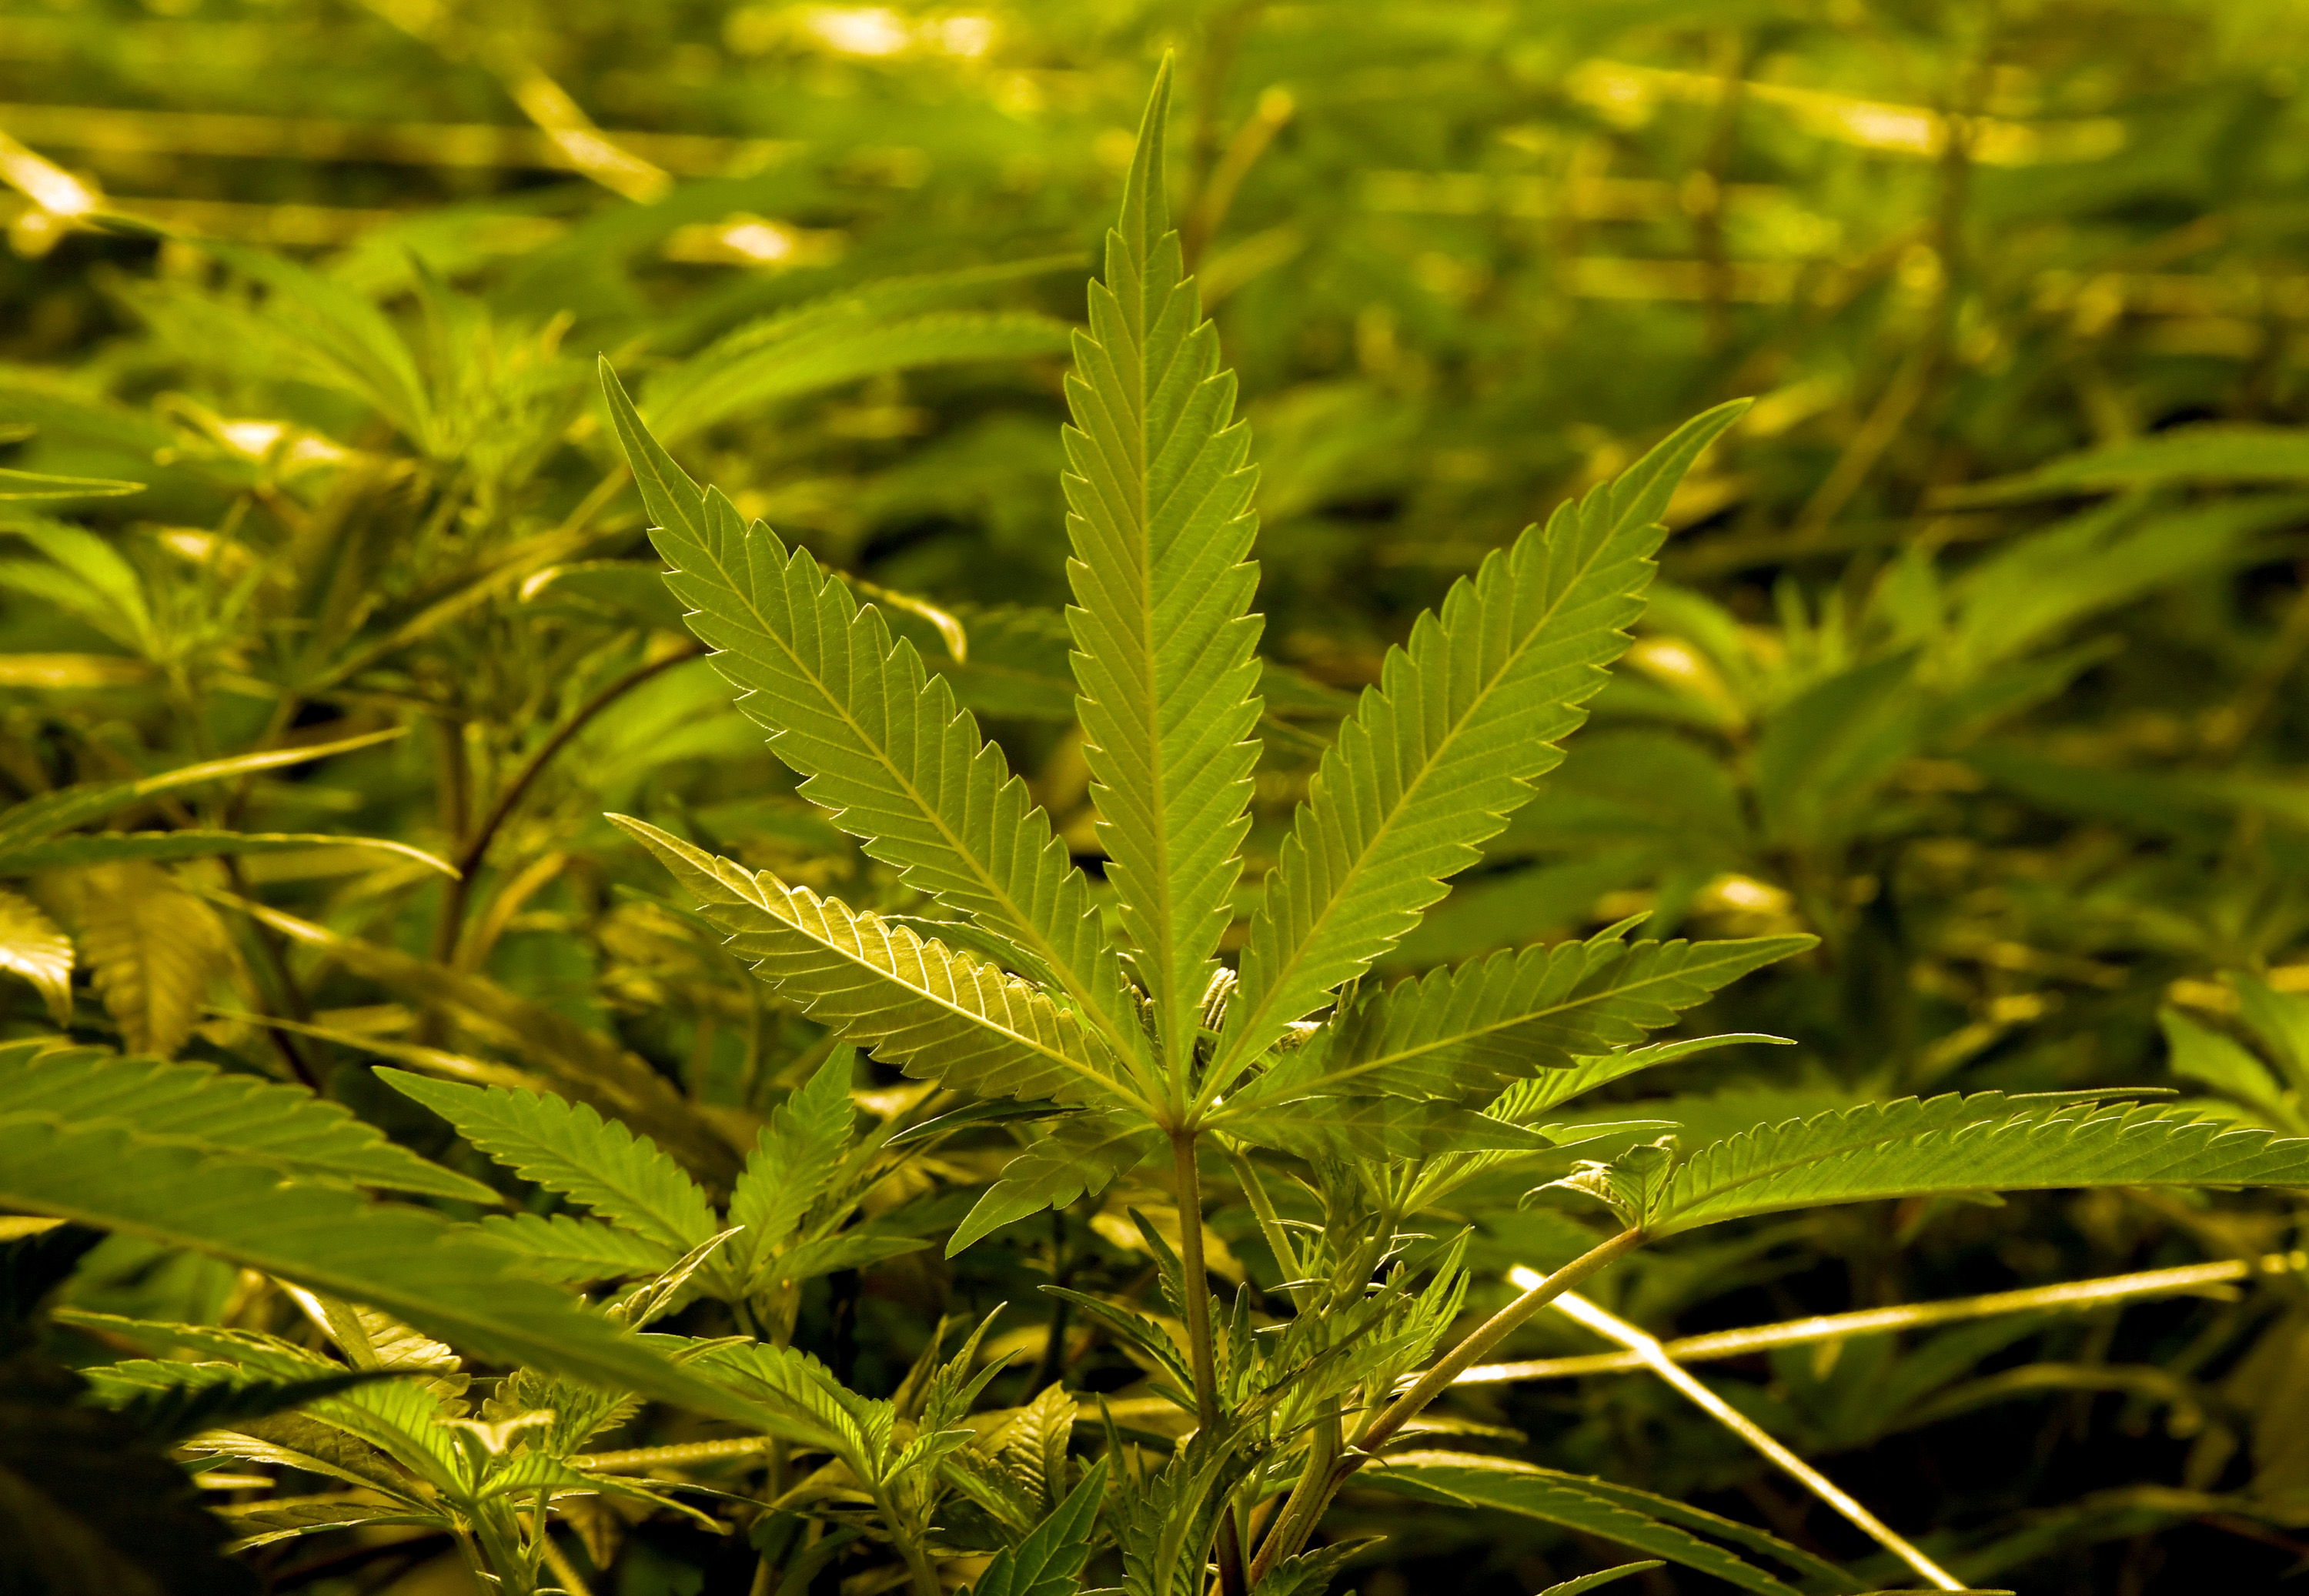 Epilepsy Drug Made From Marijuana Plant Gets Backing From FDA Staff ...